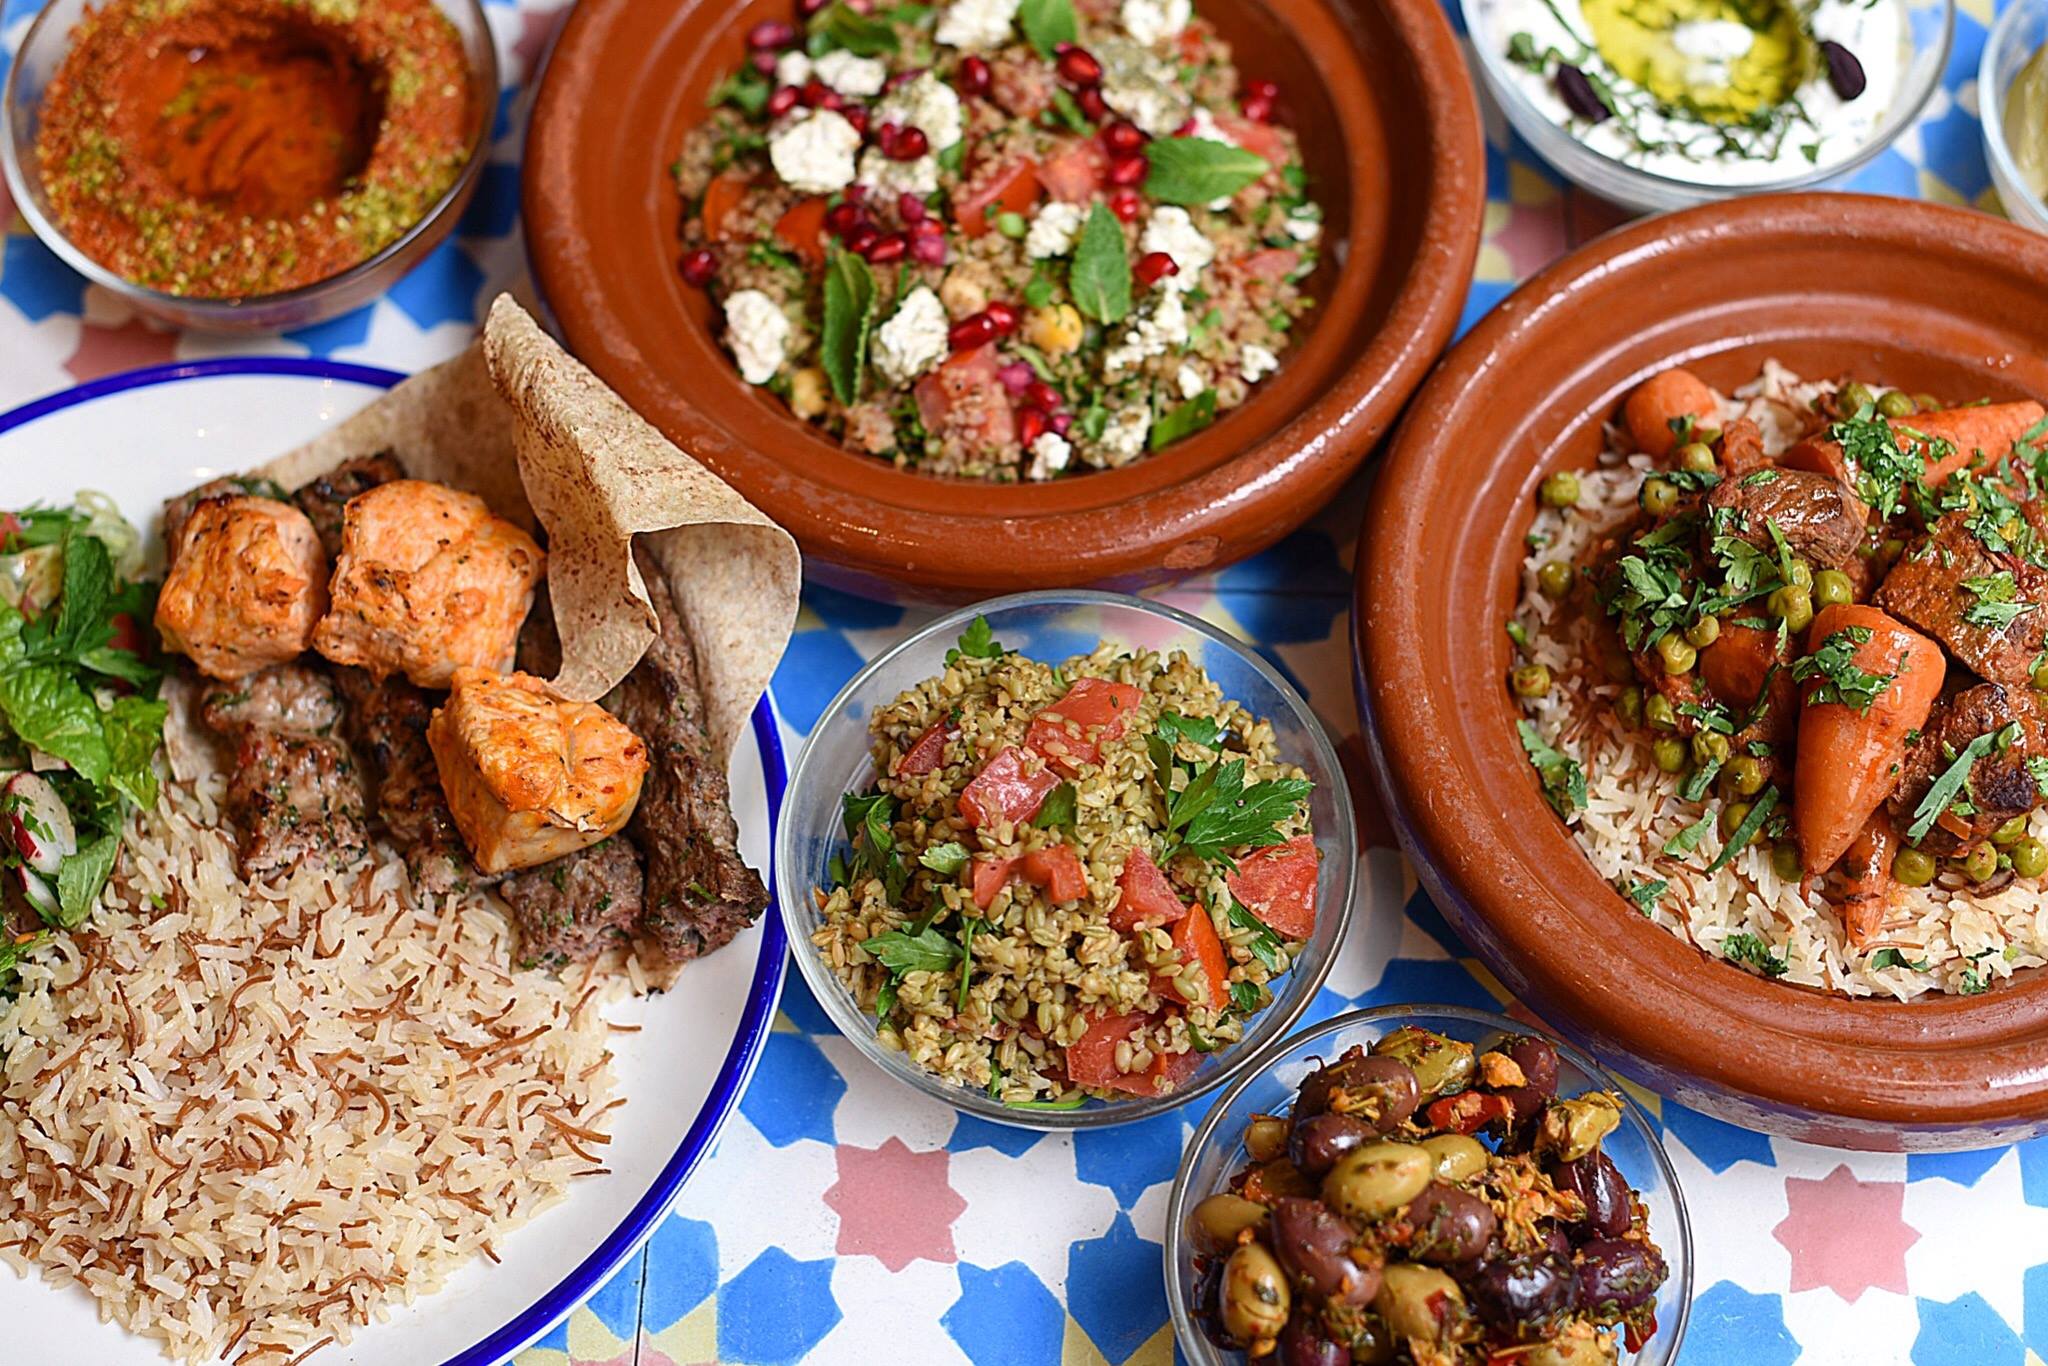  Healthy Lunches London - Comptoir Libanais